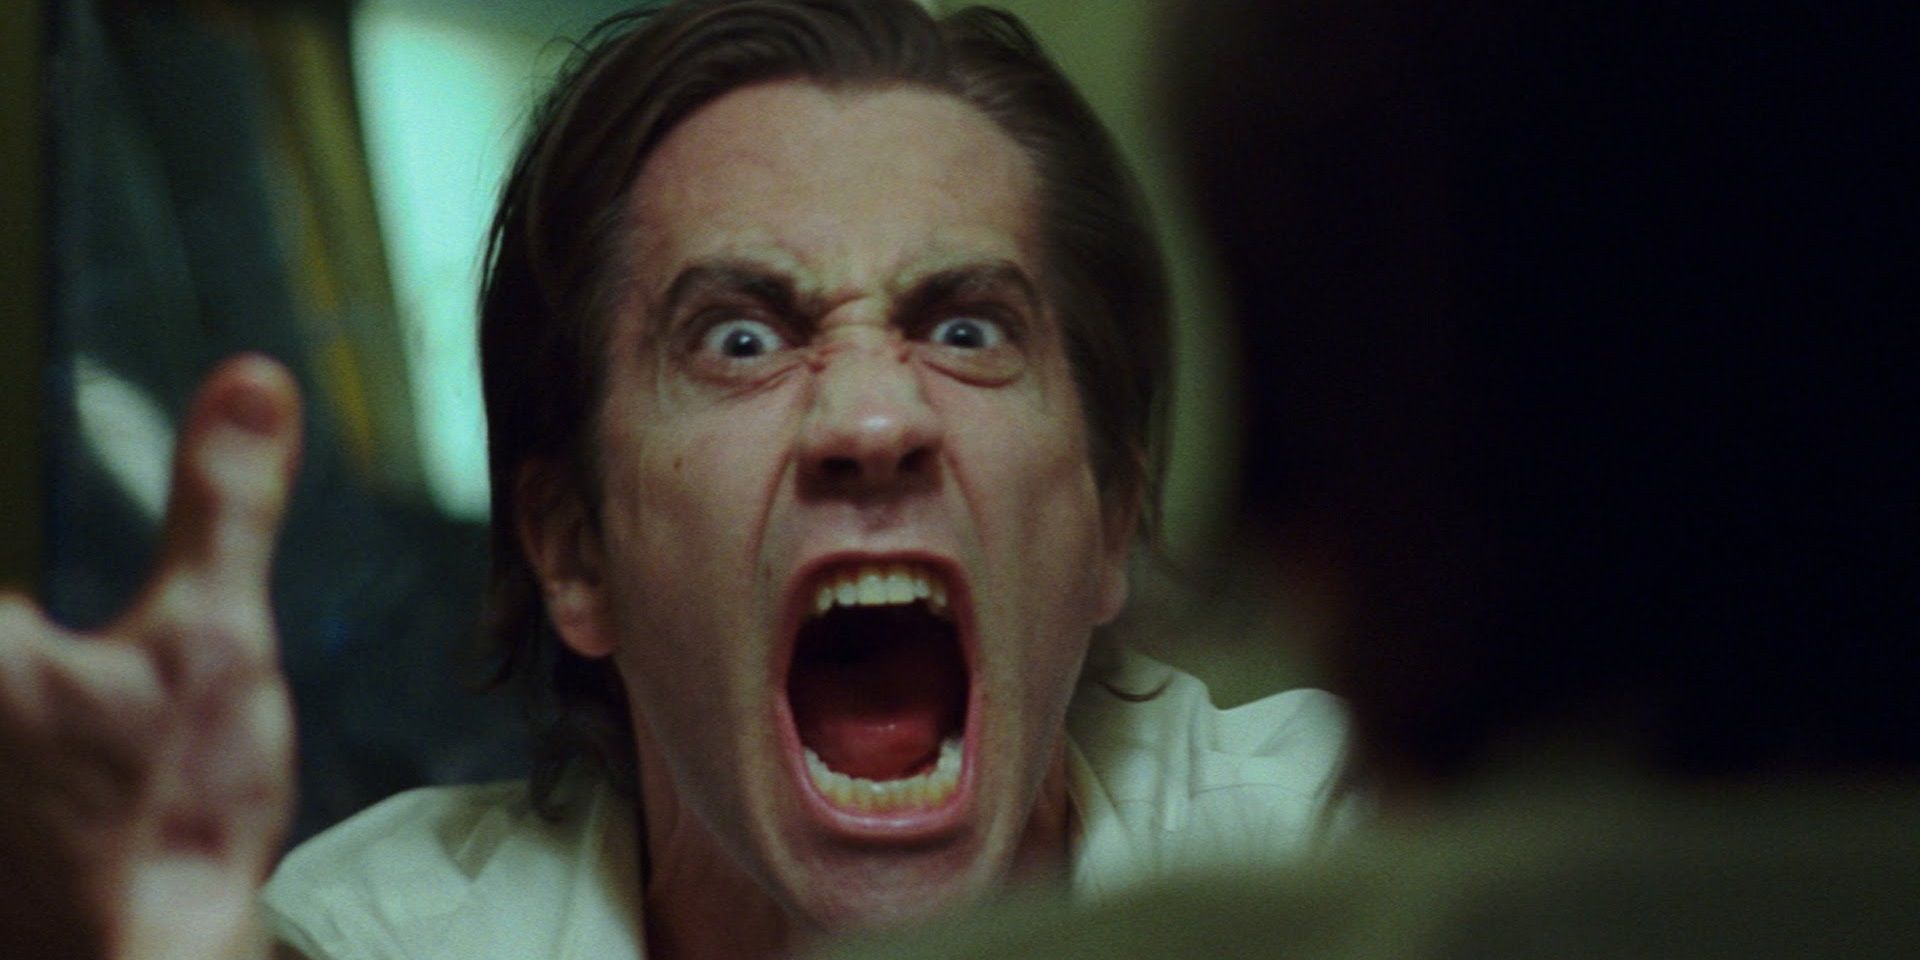 Jake Gyllenhaal screaming into a mirror in Nightcrawler